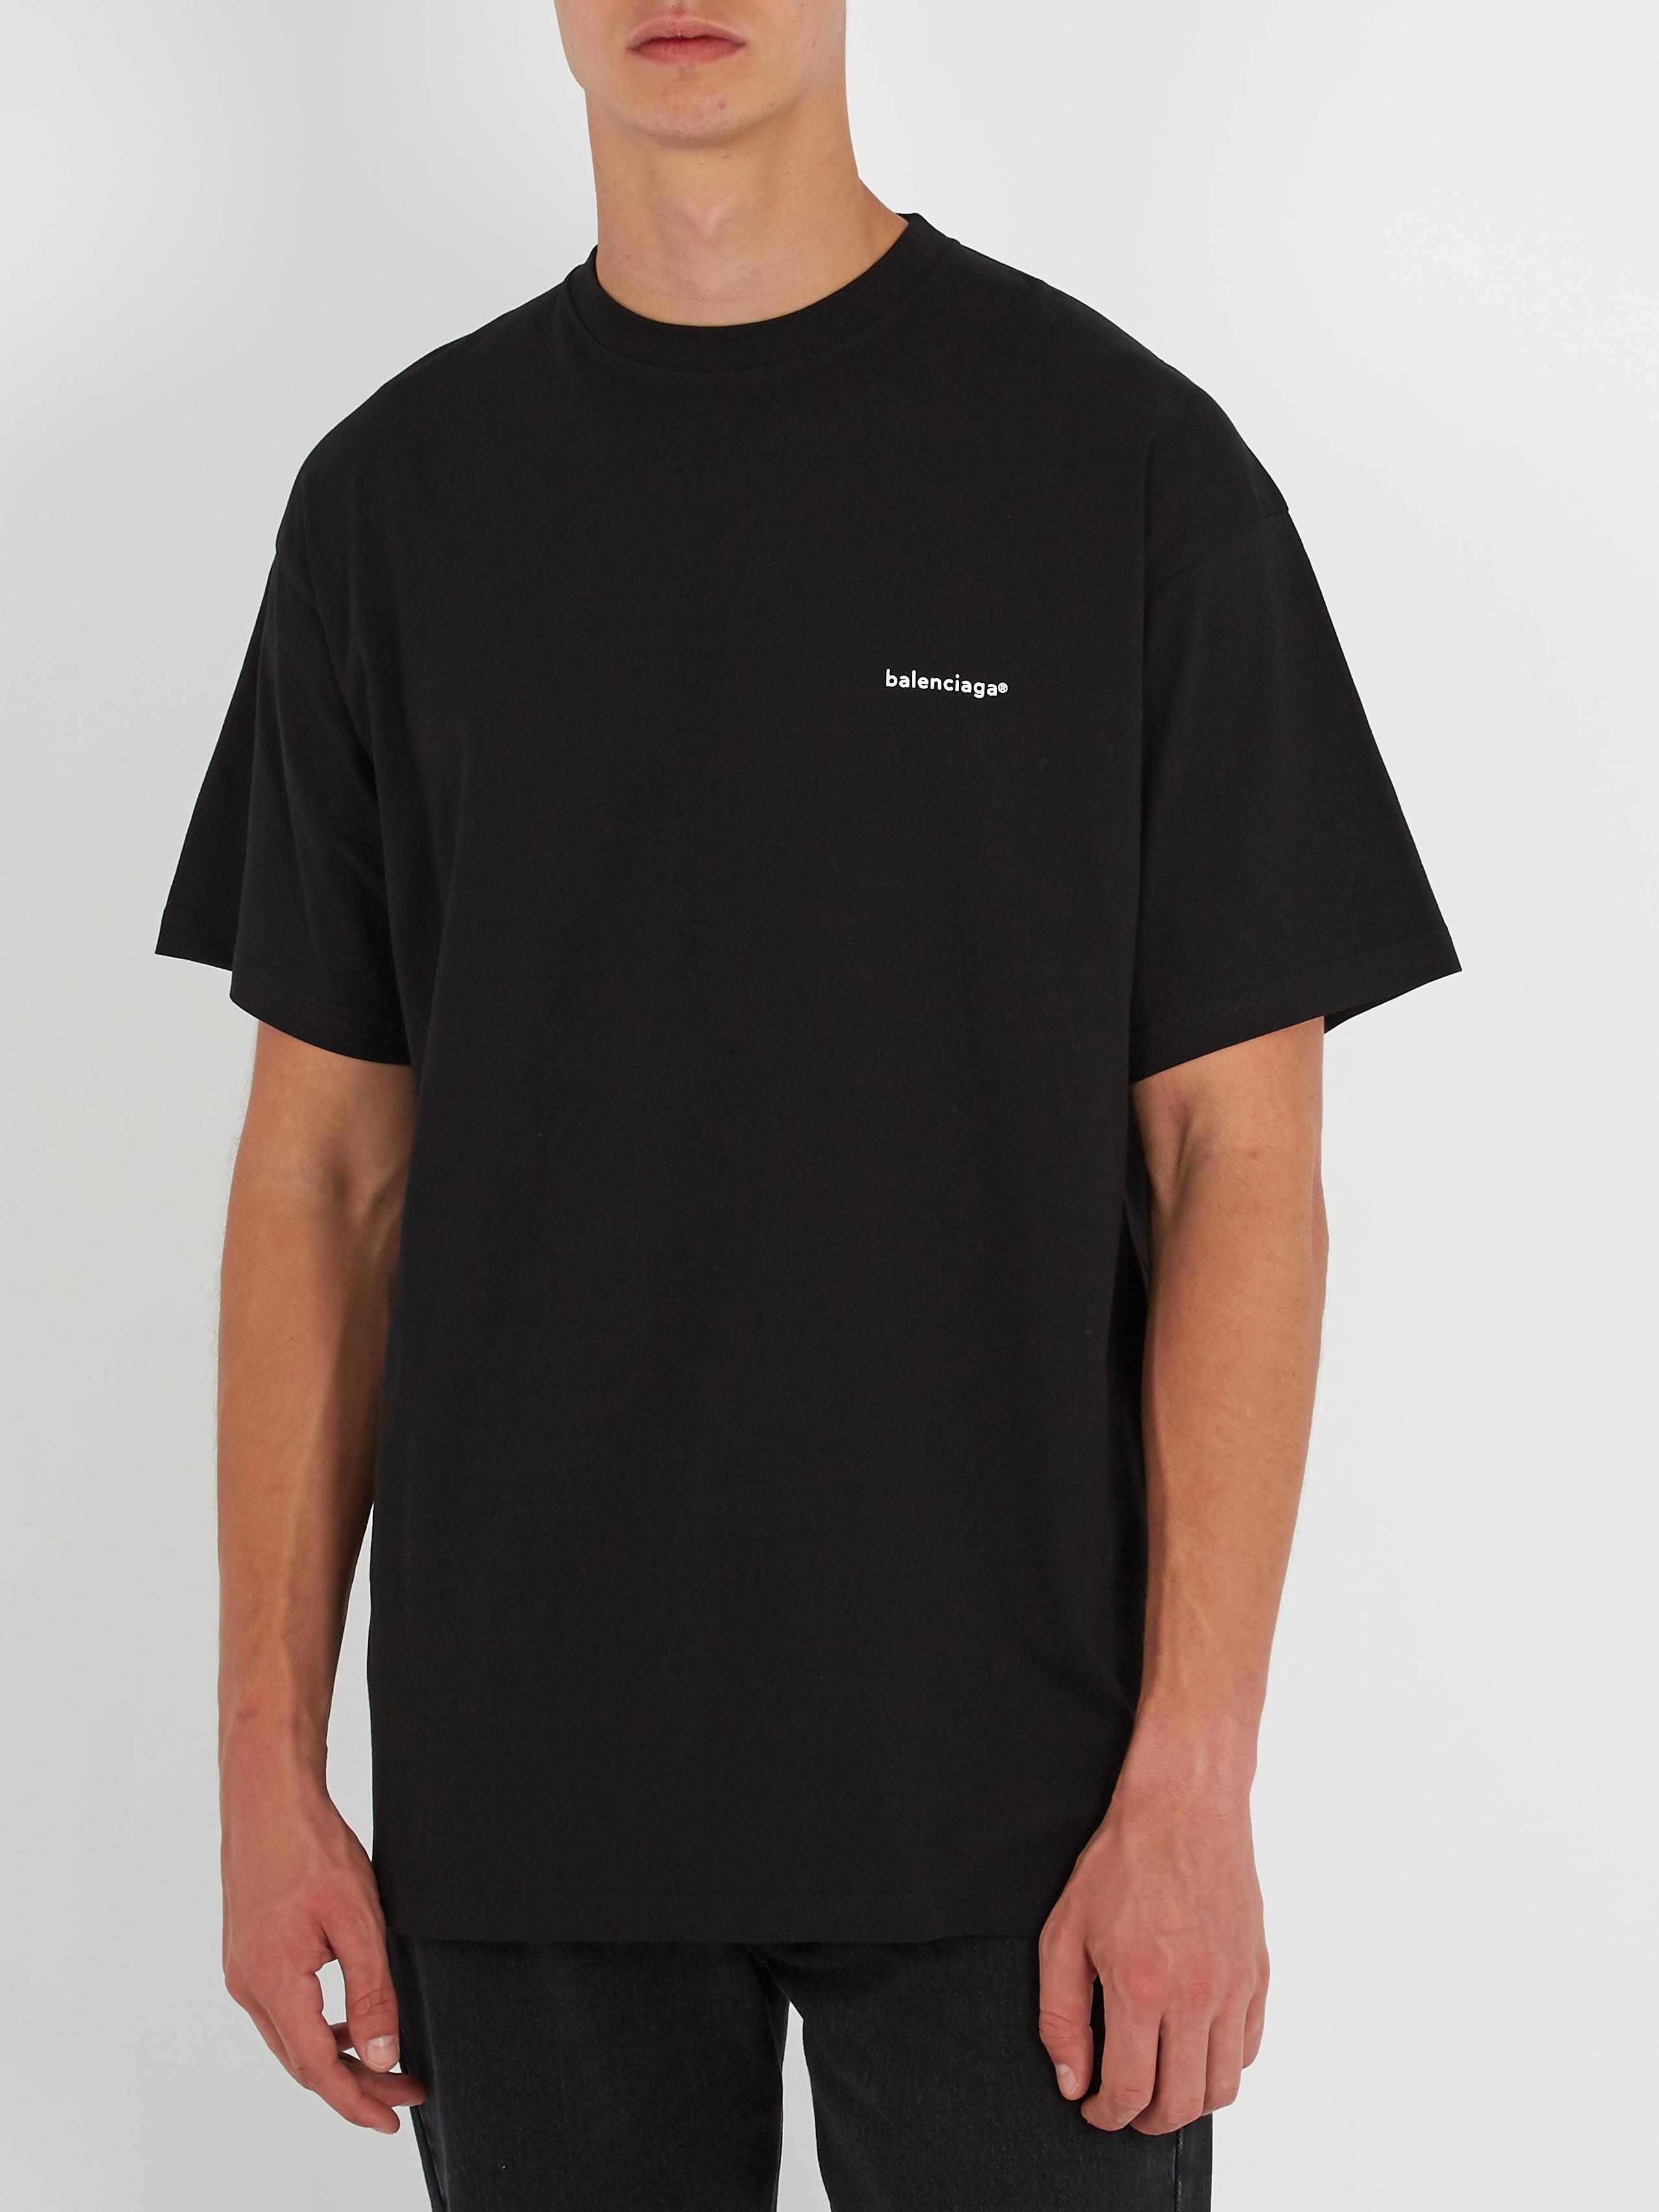 peave Gør gulvet rent Seneste nyt Balenciaga Oversized Logo-print Cotton T-shirt in Black for Men - Lyst